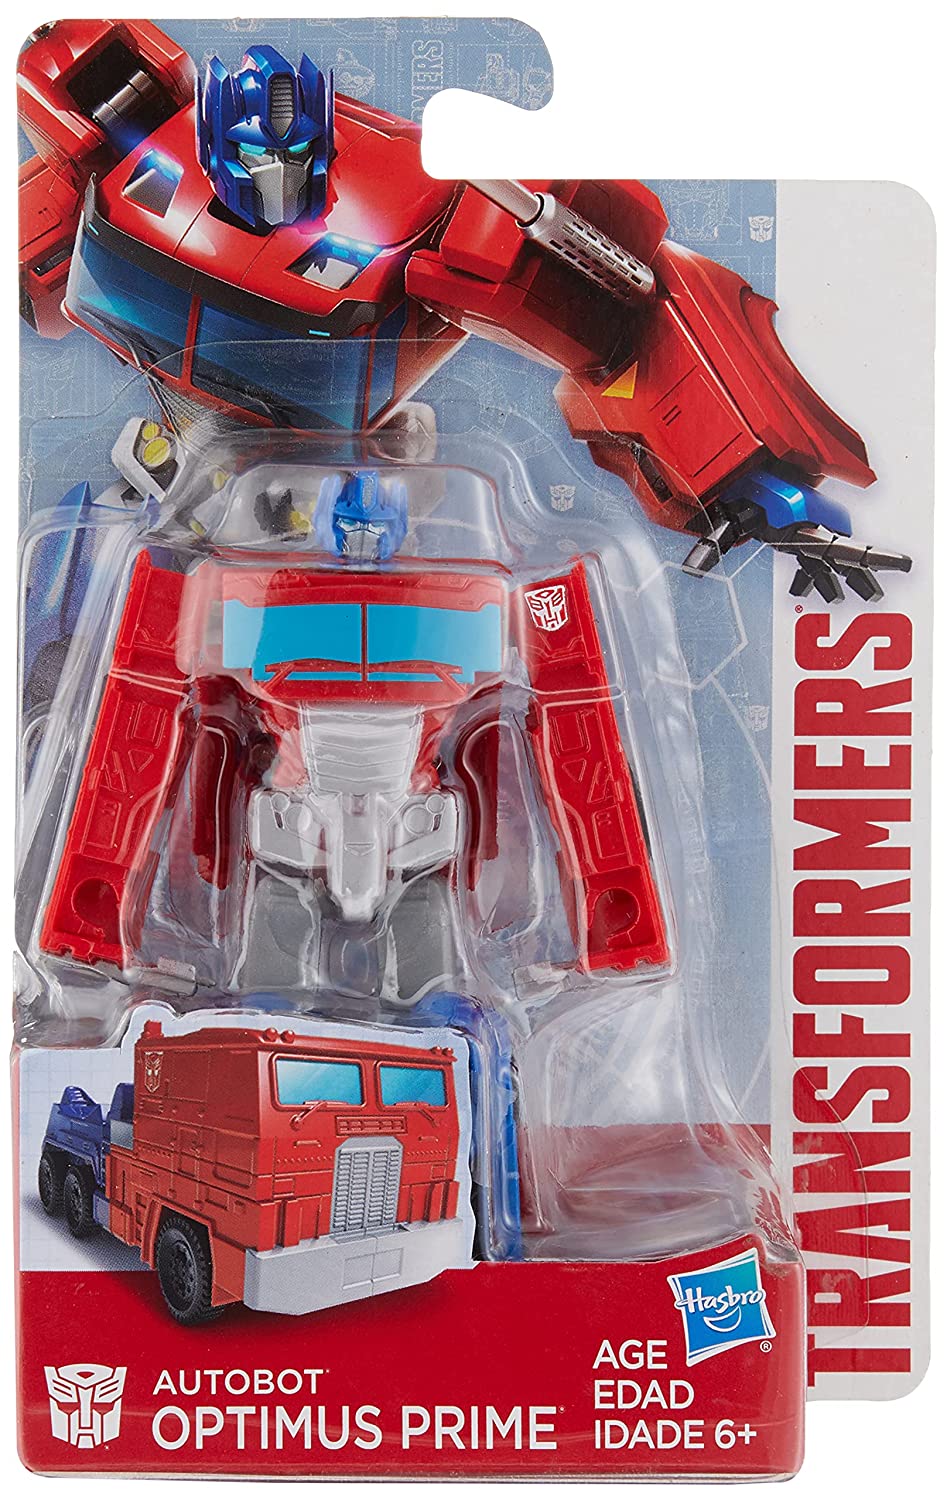 Hasbro Genuine Transformers Toys Optimus Prime Autobot Action Figure Deformation Robot Toys For Boys Kids Birthday Gift - samstoy.in